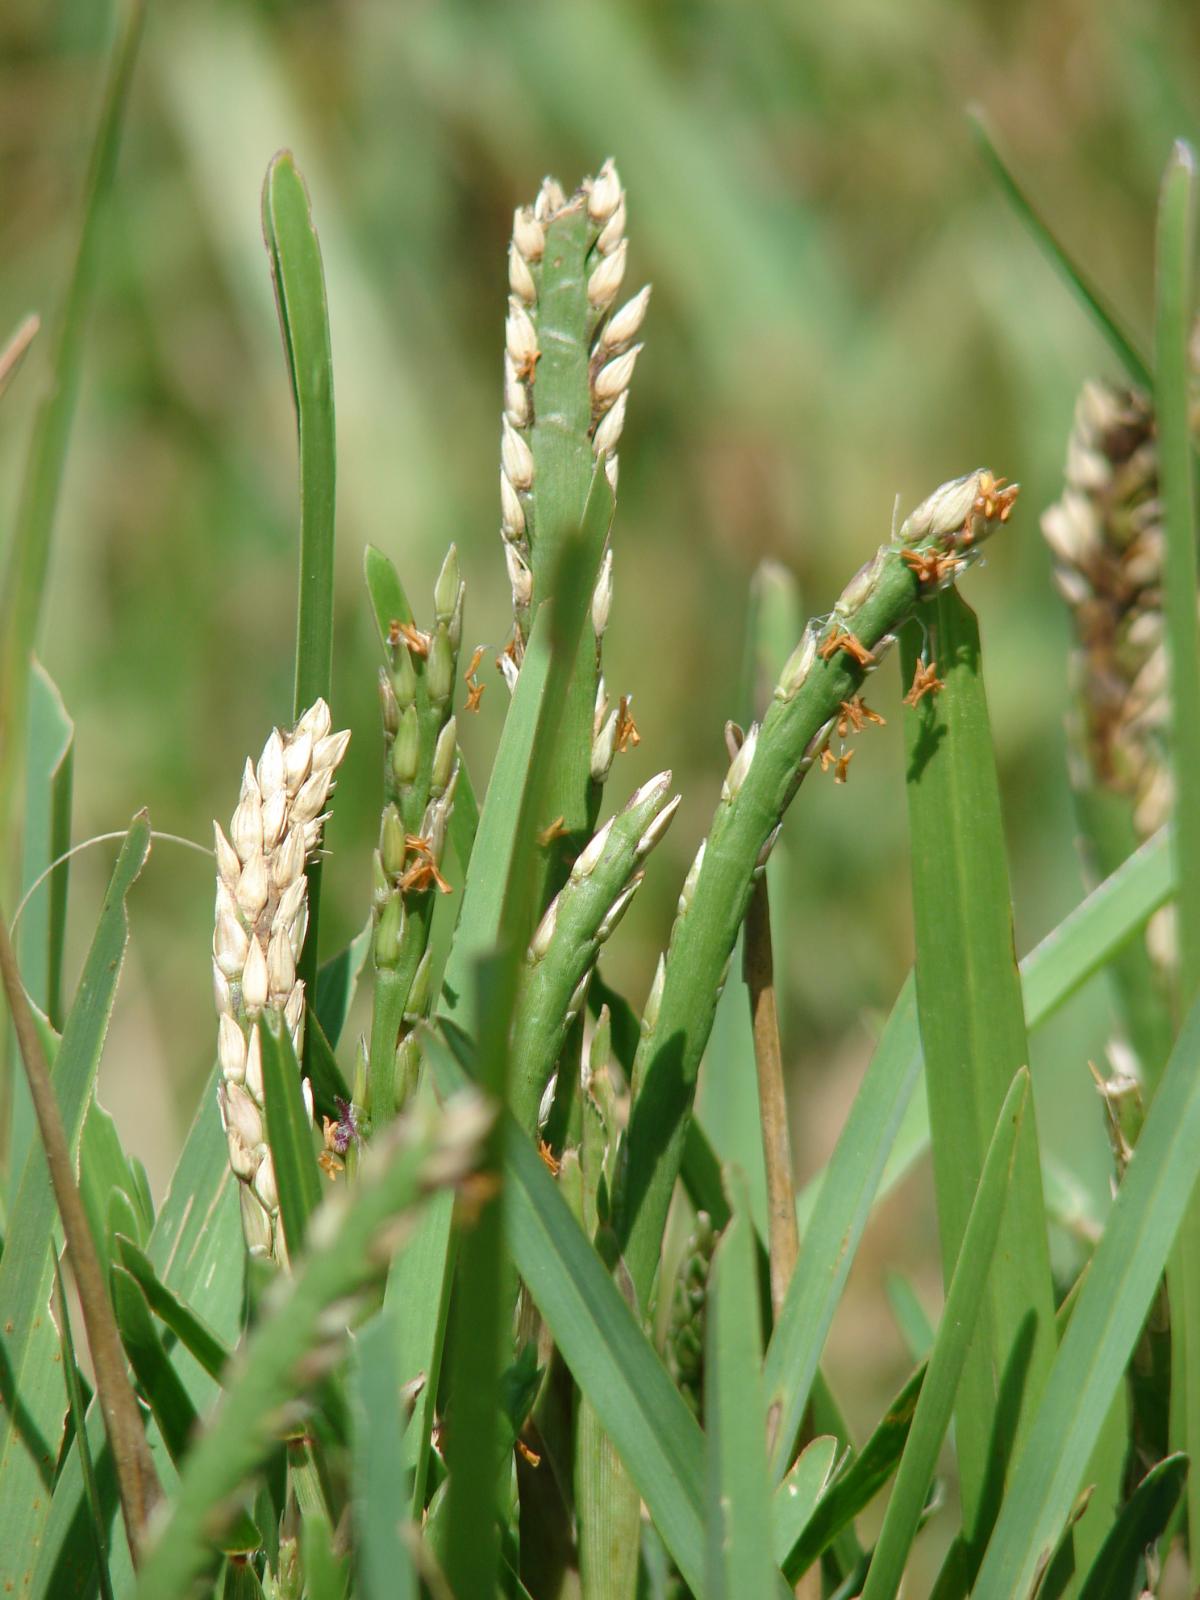 st augustine grass (stenotaphrum secundatum), flowers and seeds